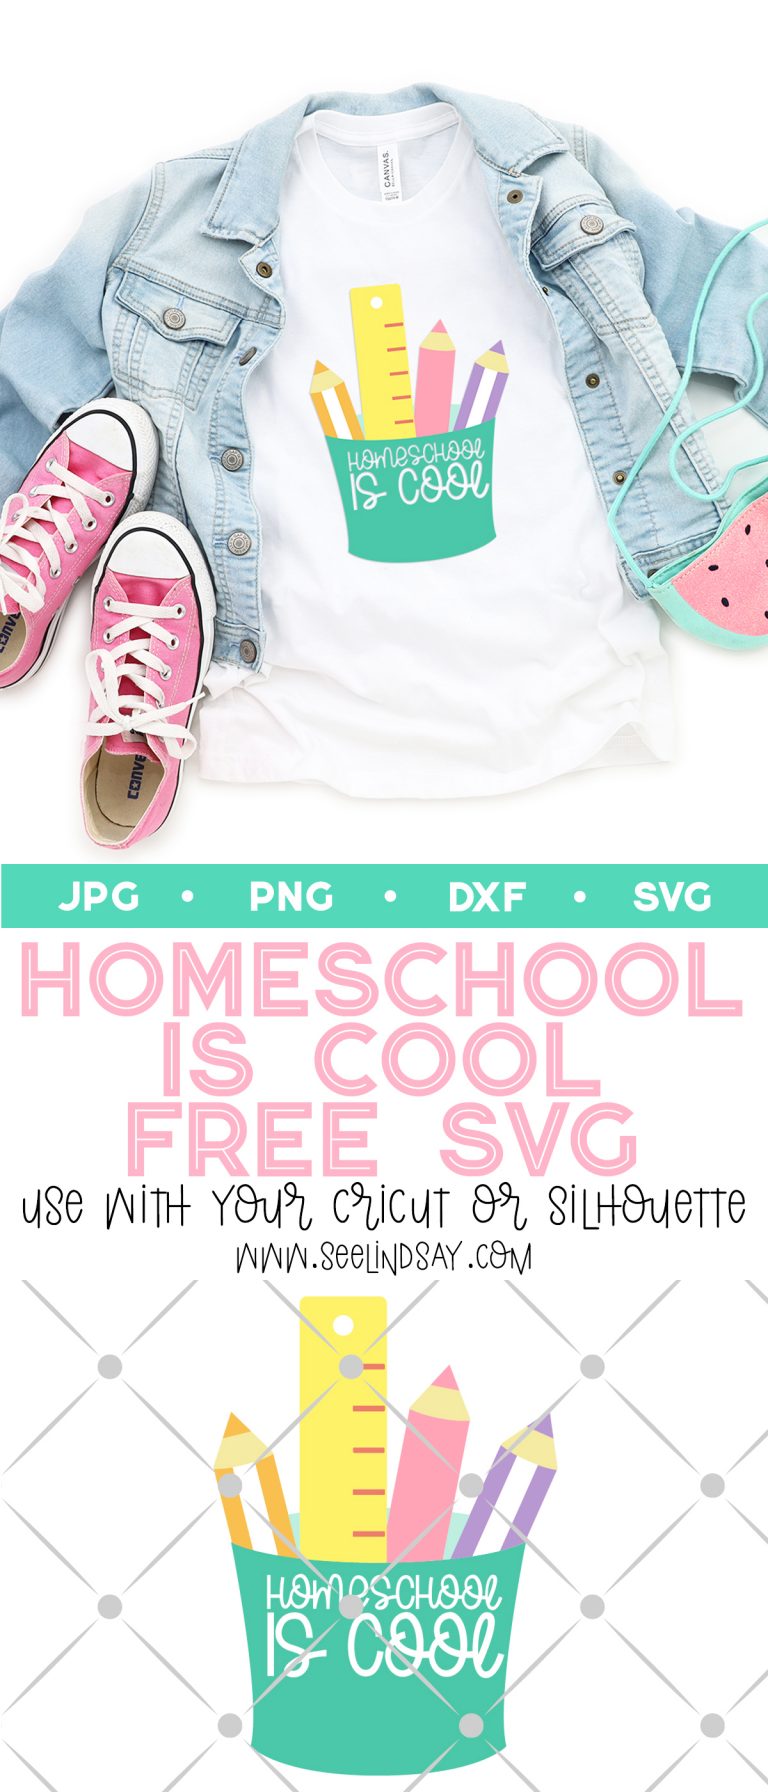 Download Free Homeschool SVG Files - Homeschool Is Cool Tee ...